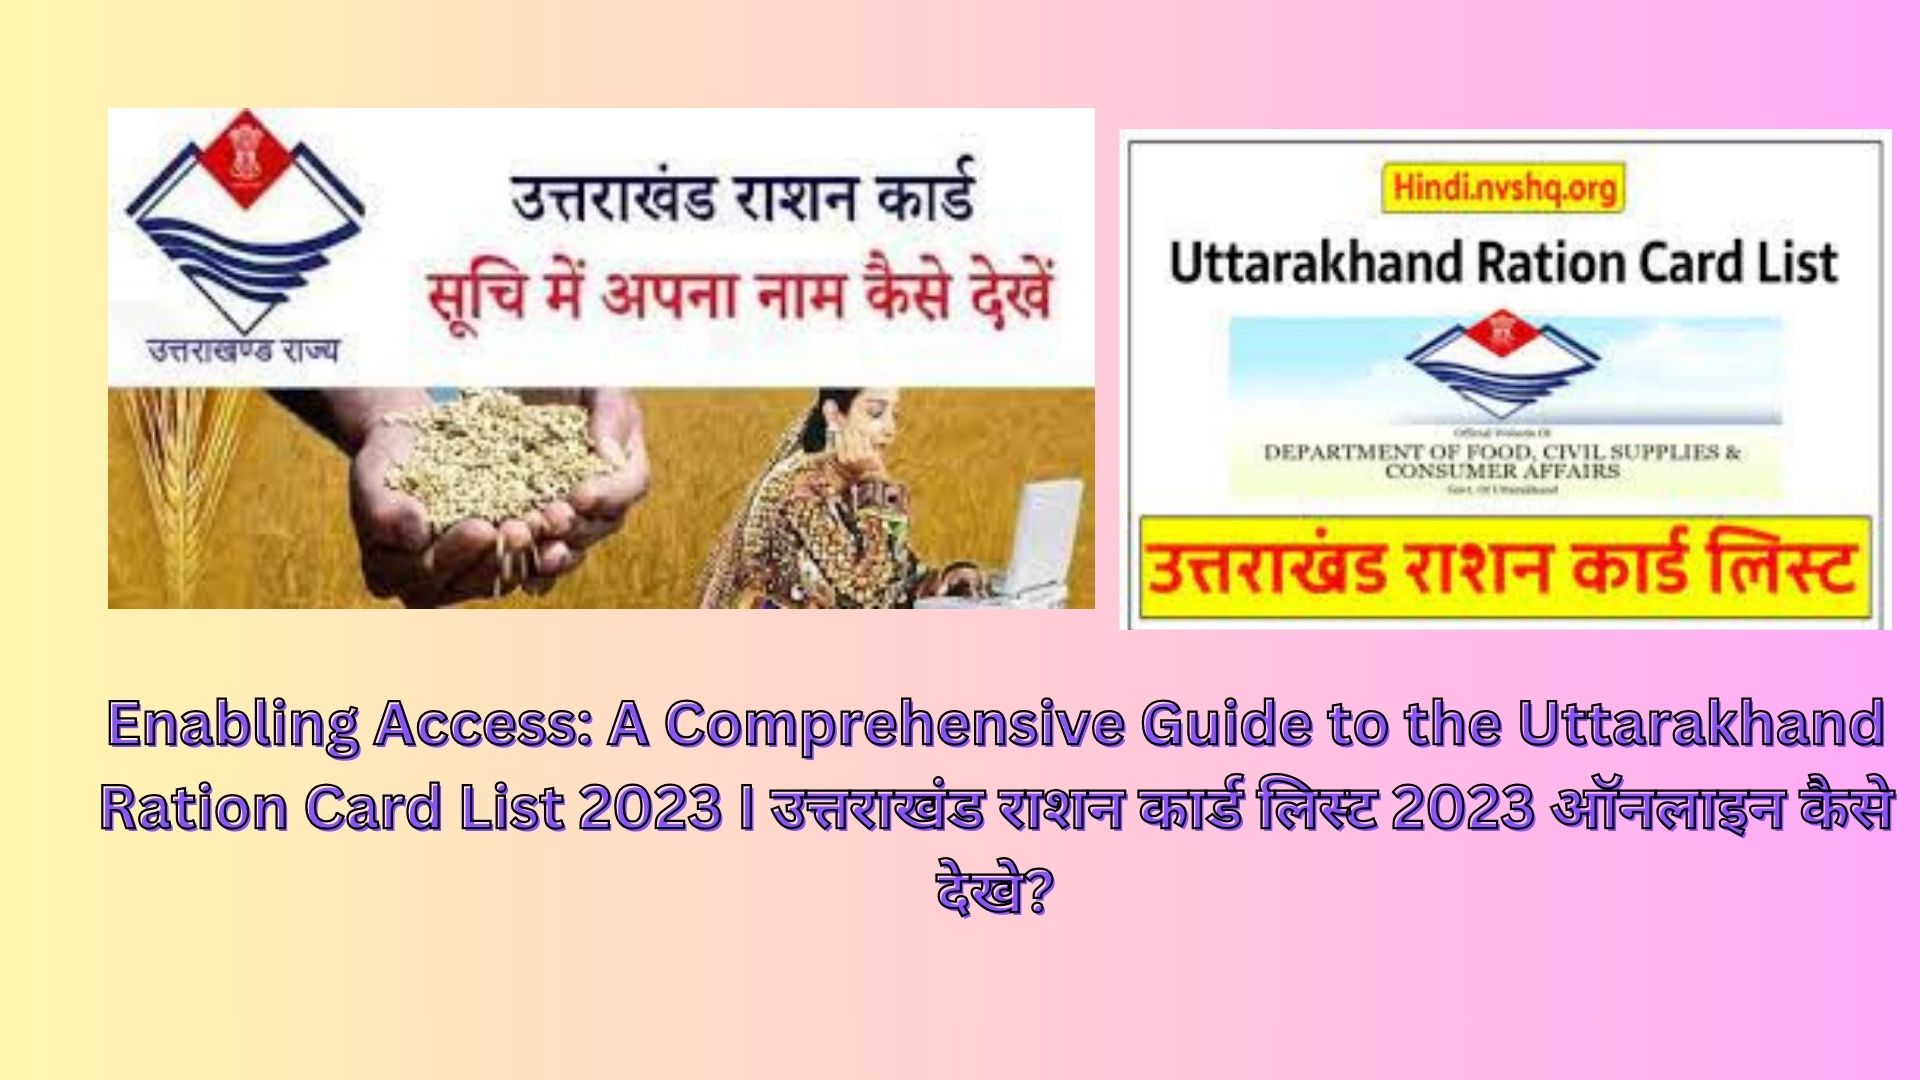 Enabling Access: A Comprehensive Guide to the Uttarakhand Ration Card List 2023 I उत्तराखंड राशन कार्ड लिस्ट 2023 ऑनलाइन कैसे देखे?